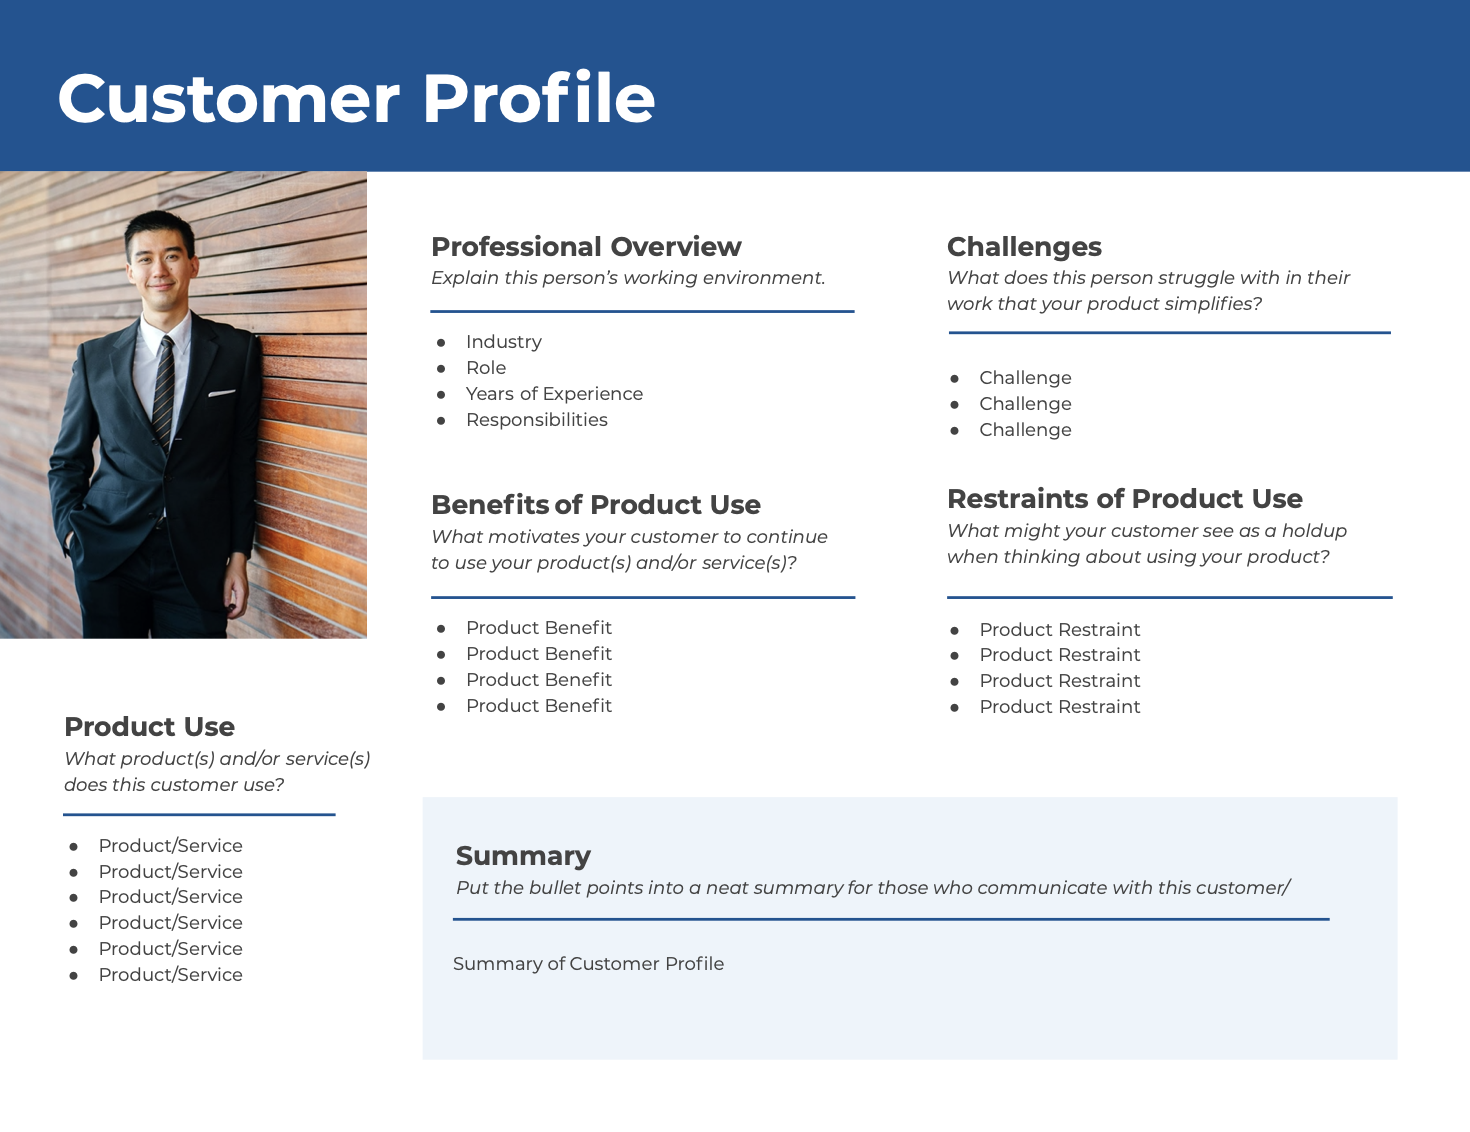 How to create a Customer Profile? Marketing91